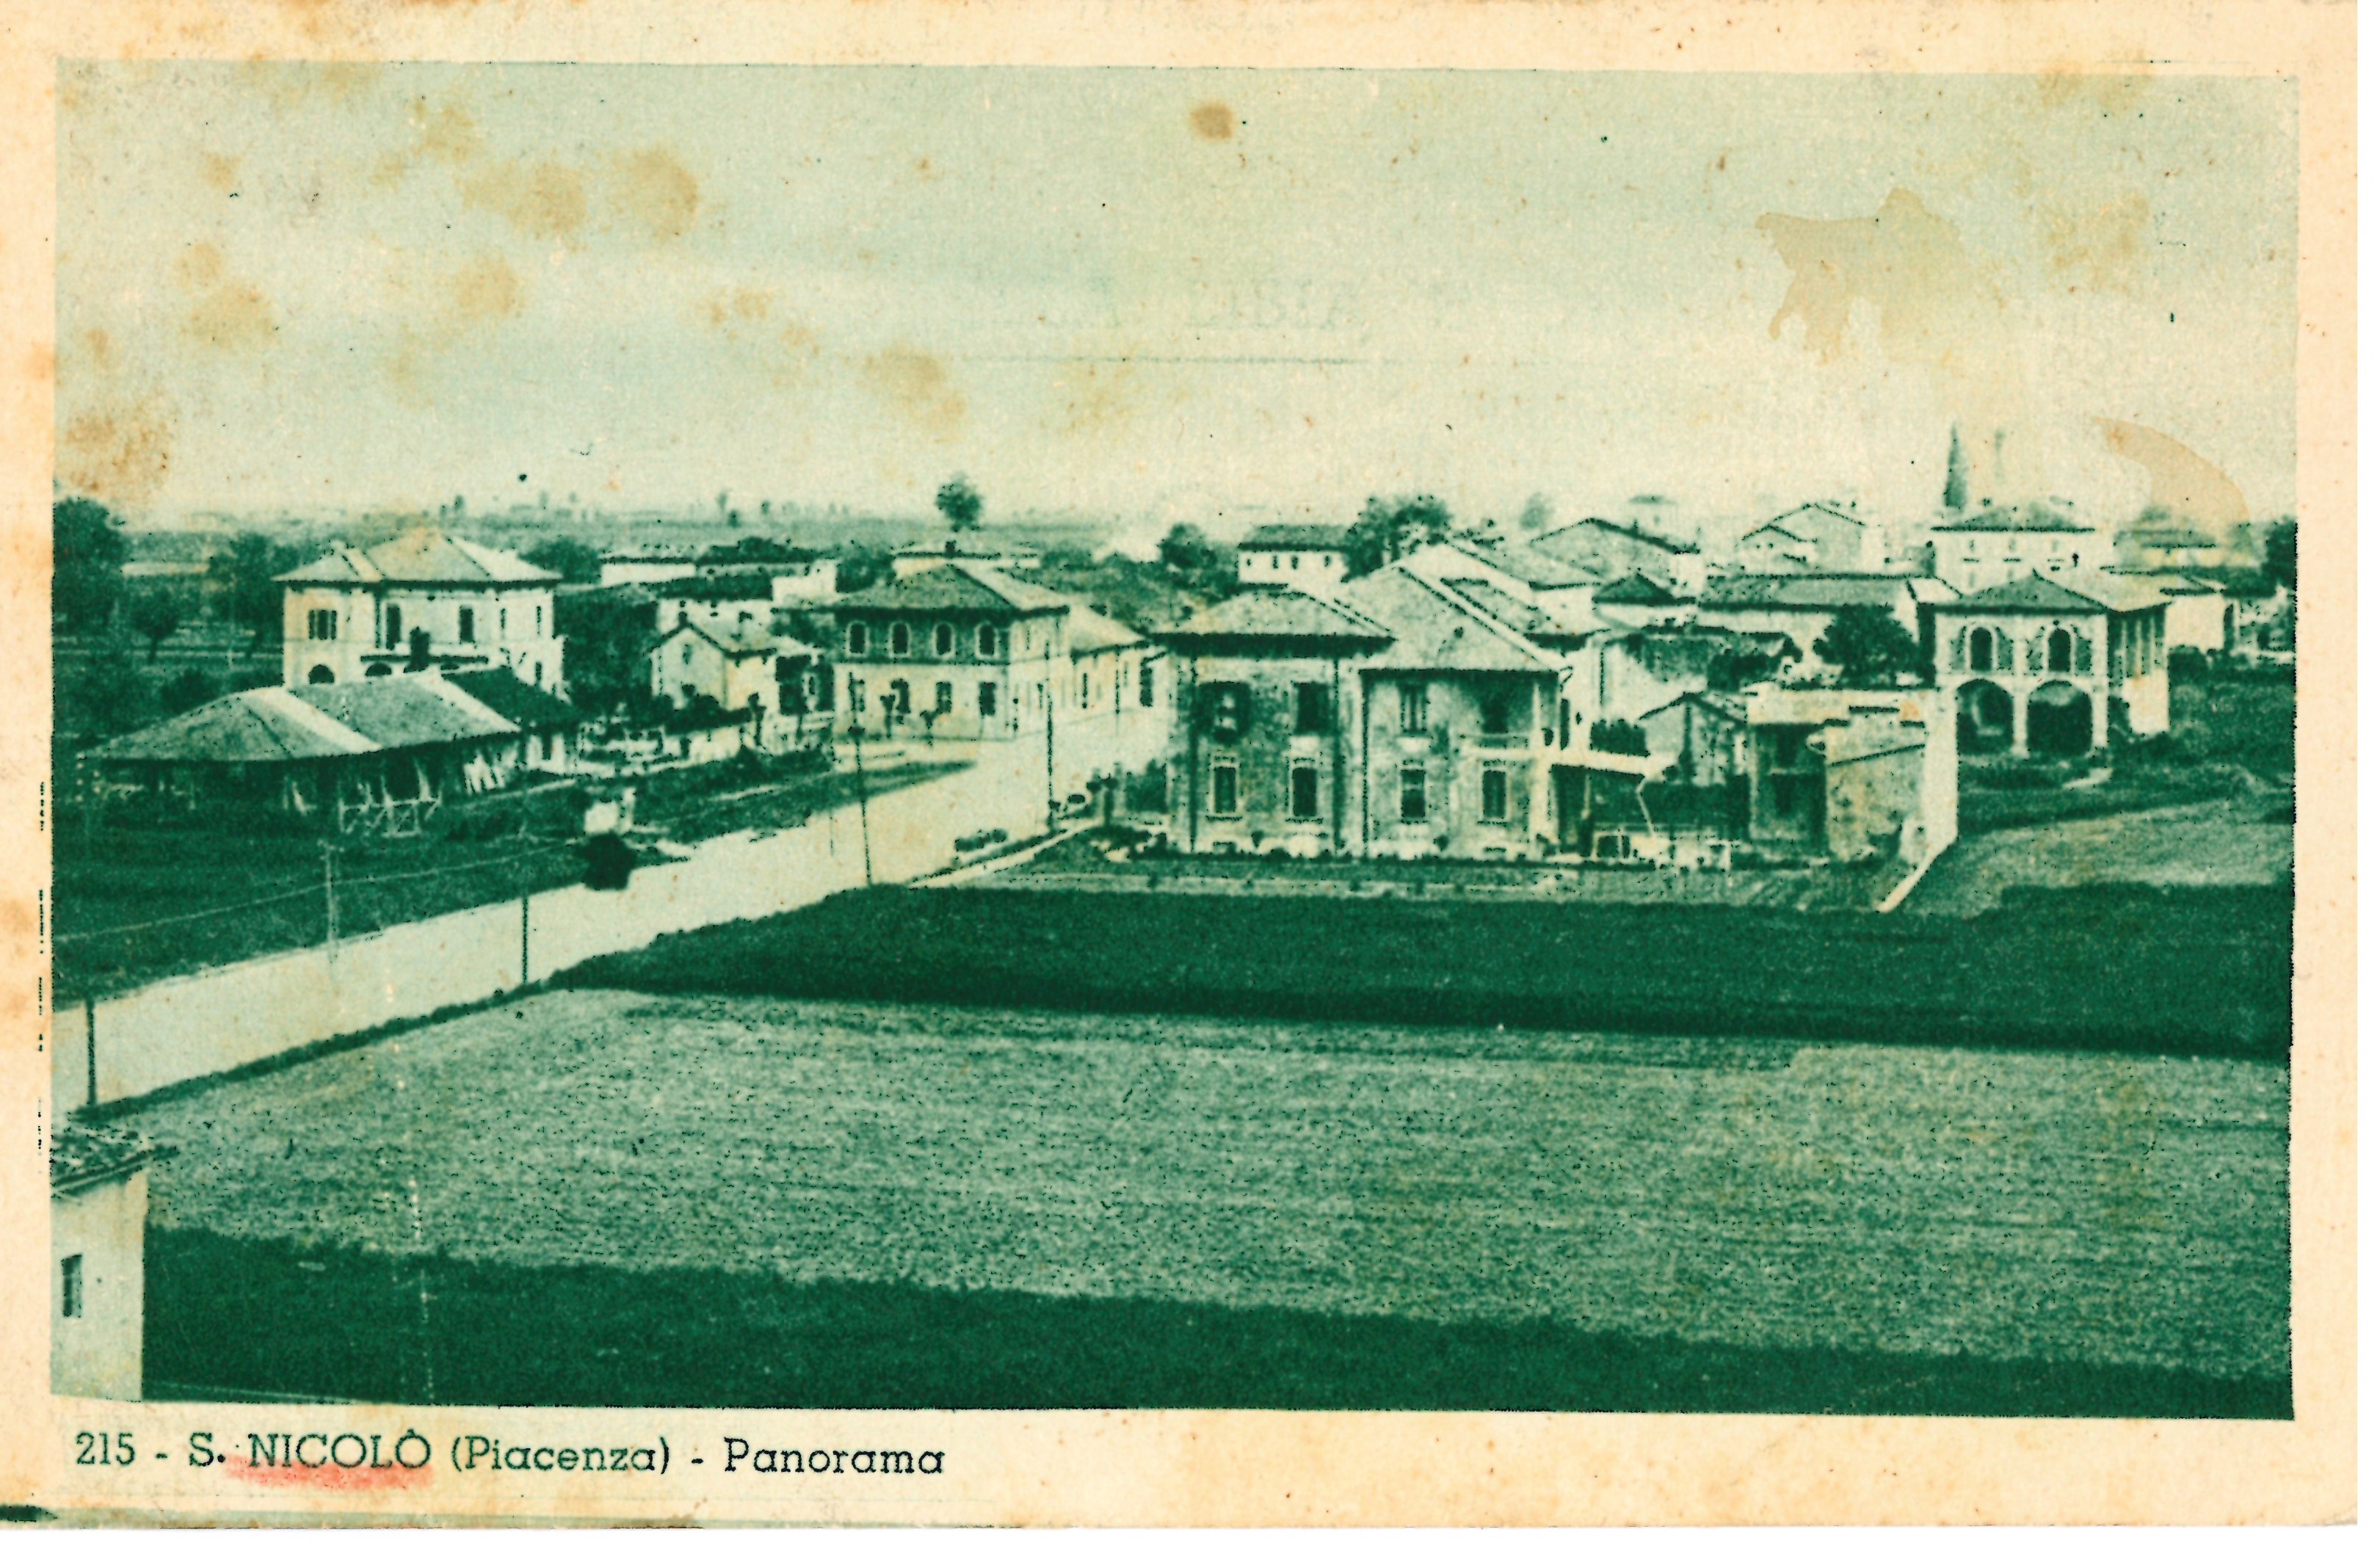 S. Nicolo panorama.jpg